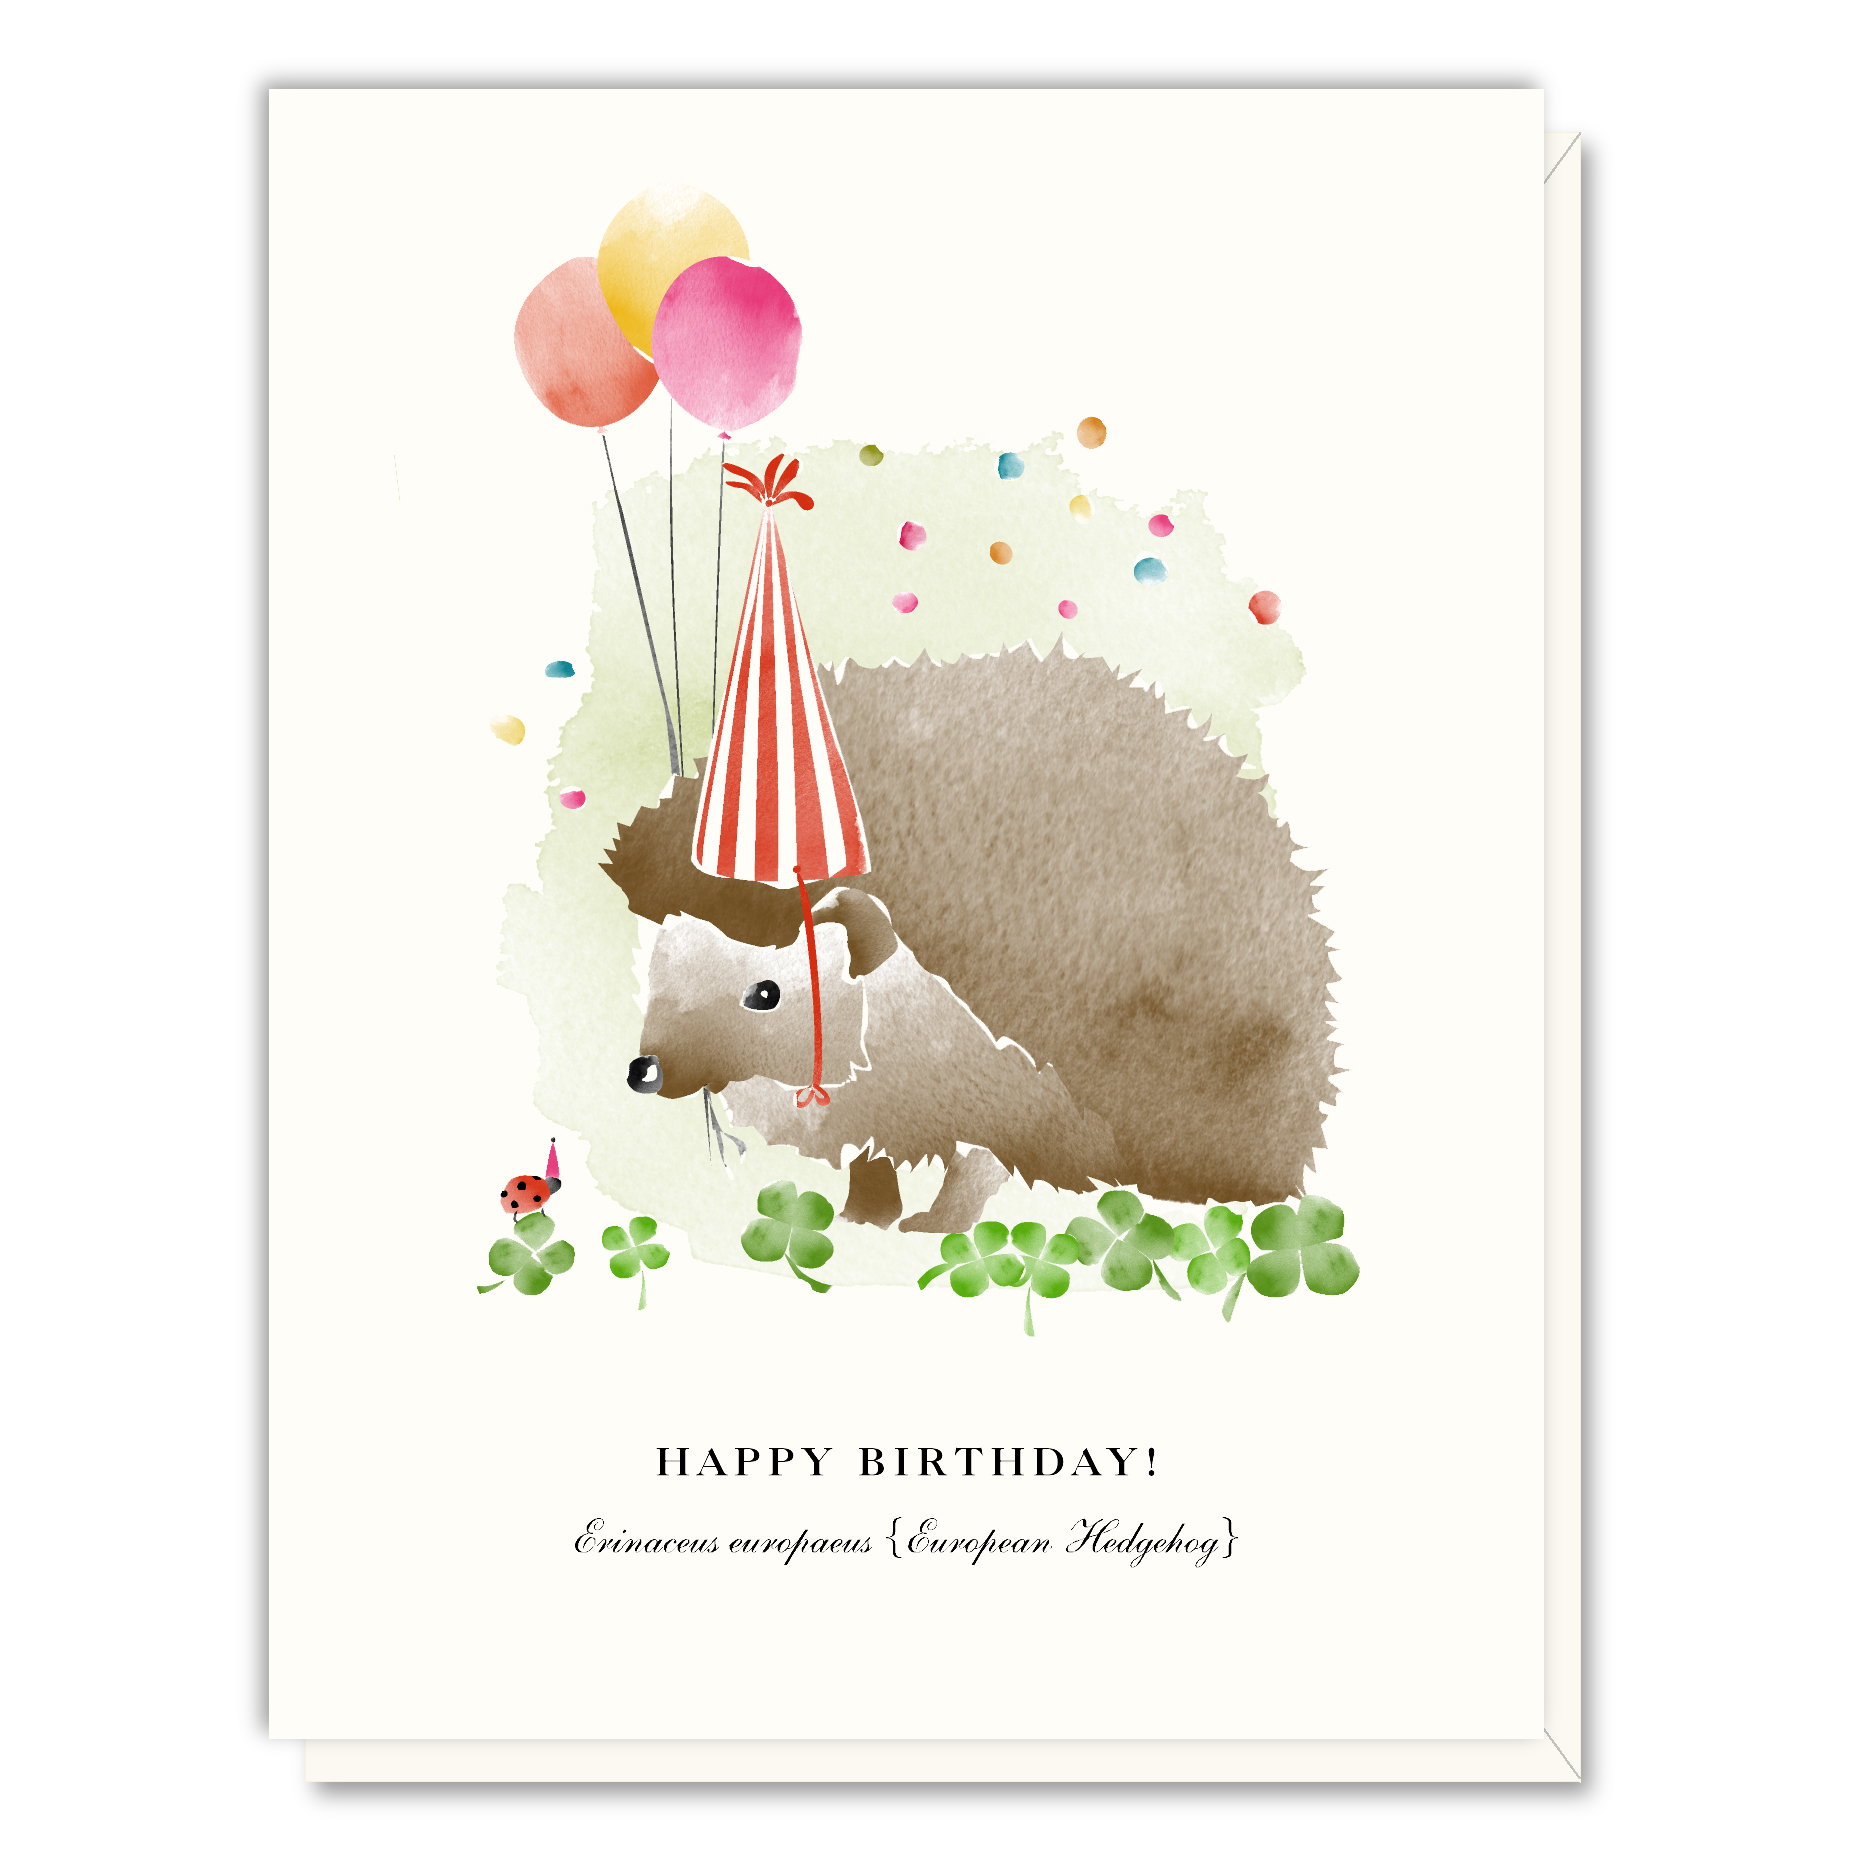 HAPPY BIRTHDAY Greeting Card Birthday Blank Inside Sheep 